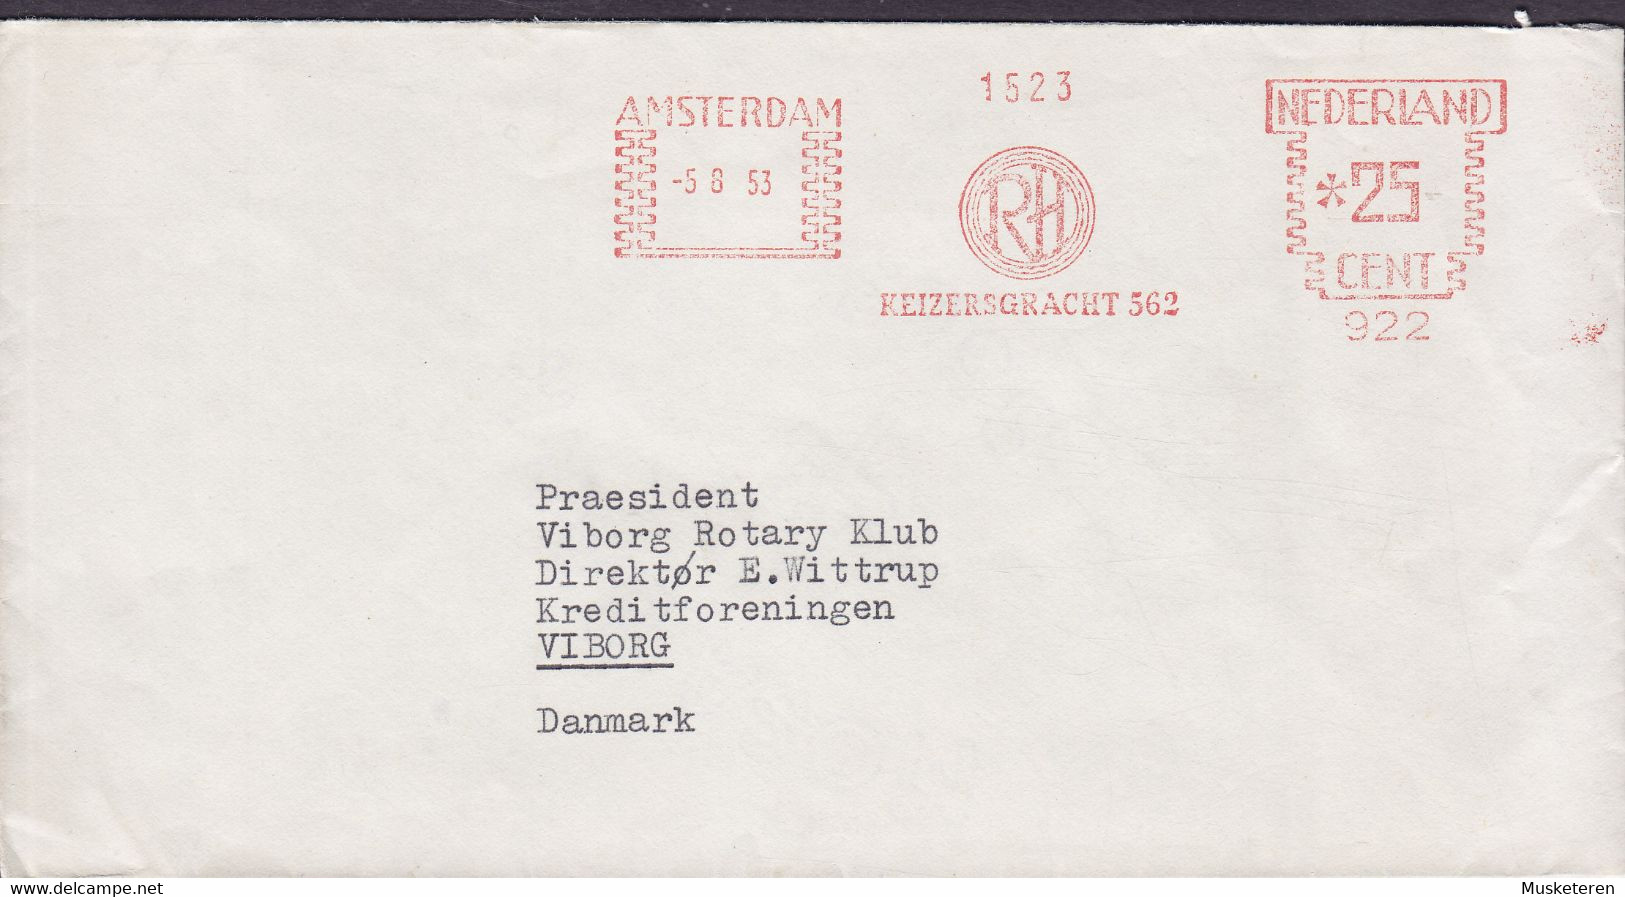 Netherlands 'RH Keizergracht 562 '1523'' AMSTERDAM 1953 Meter Cover Freistempel Brief VIBORG ROTARY KLUB Denmark - Frankeermachines (EMA)